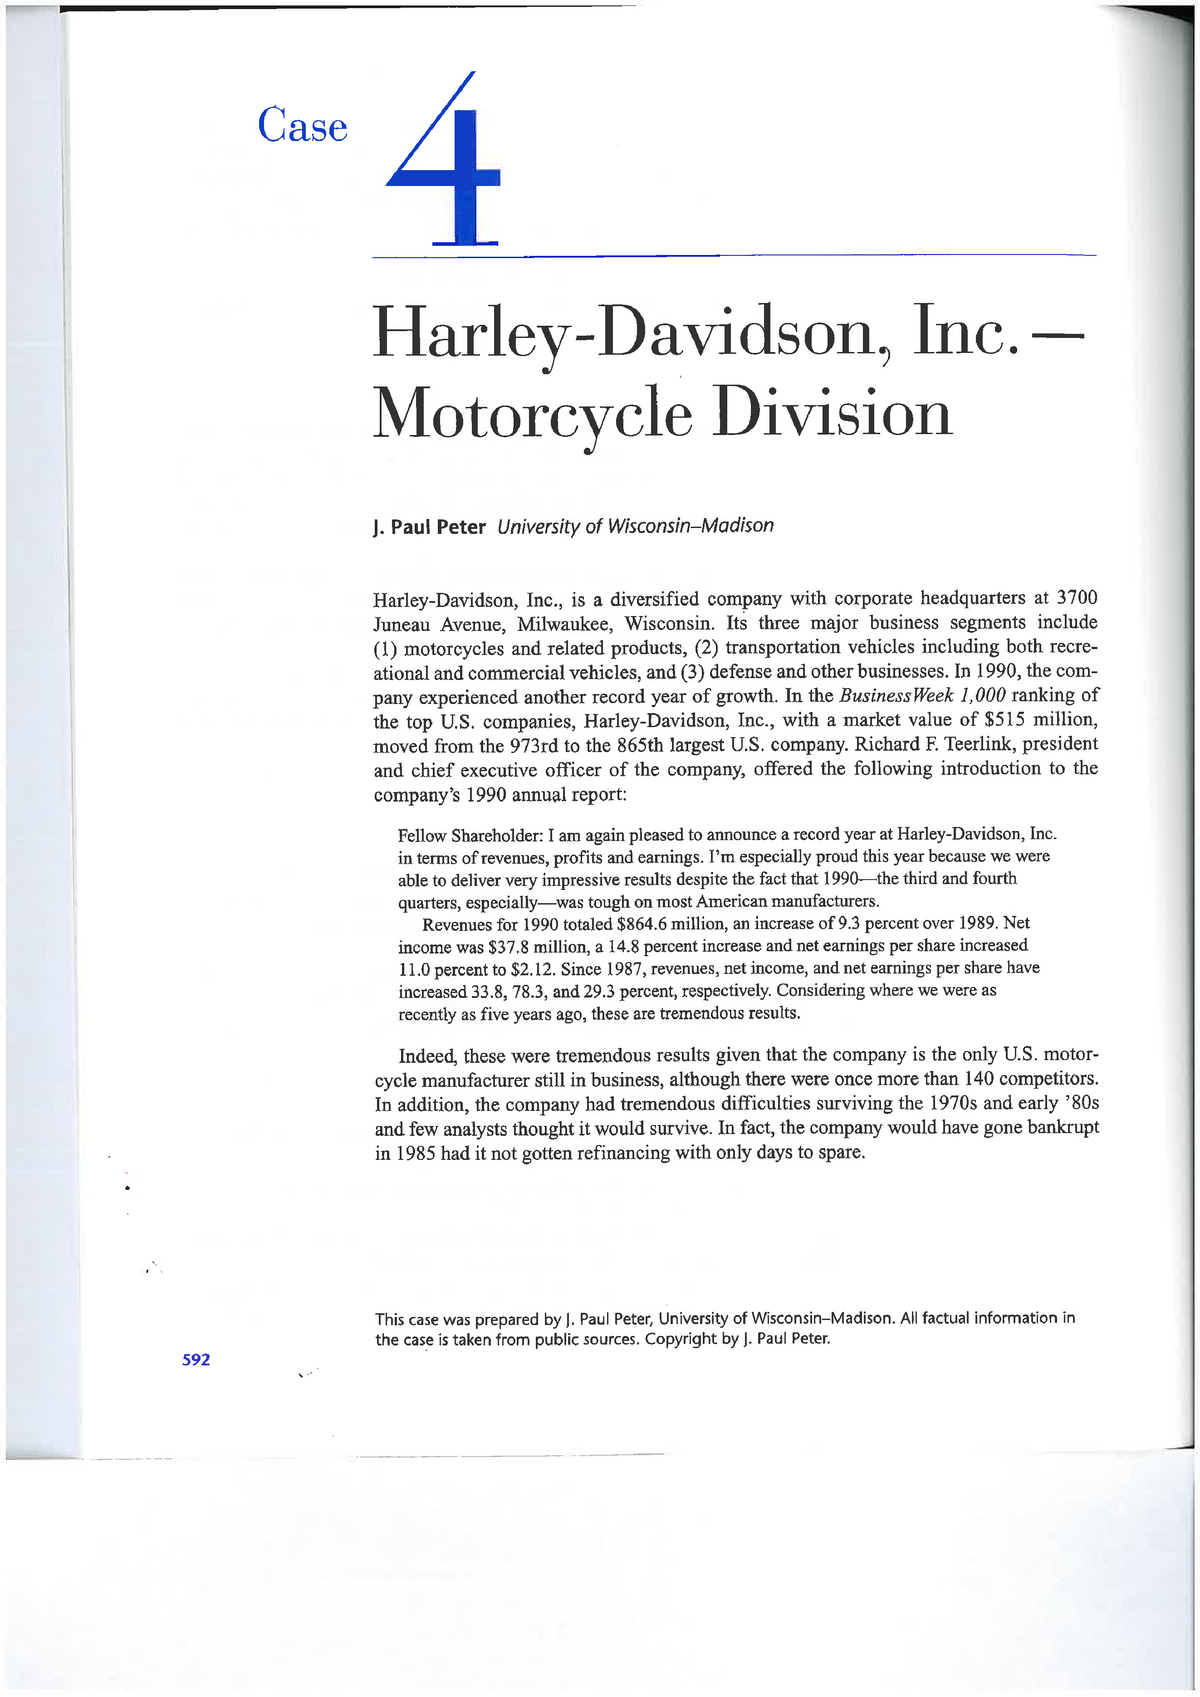 Case Study For Marketing Management Harley Davidson Studocu